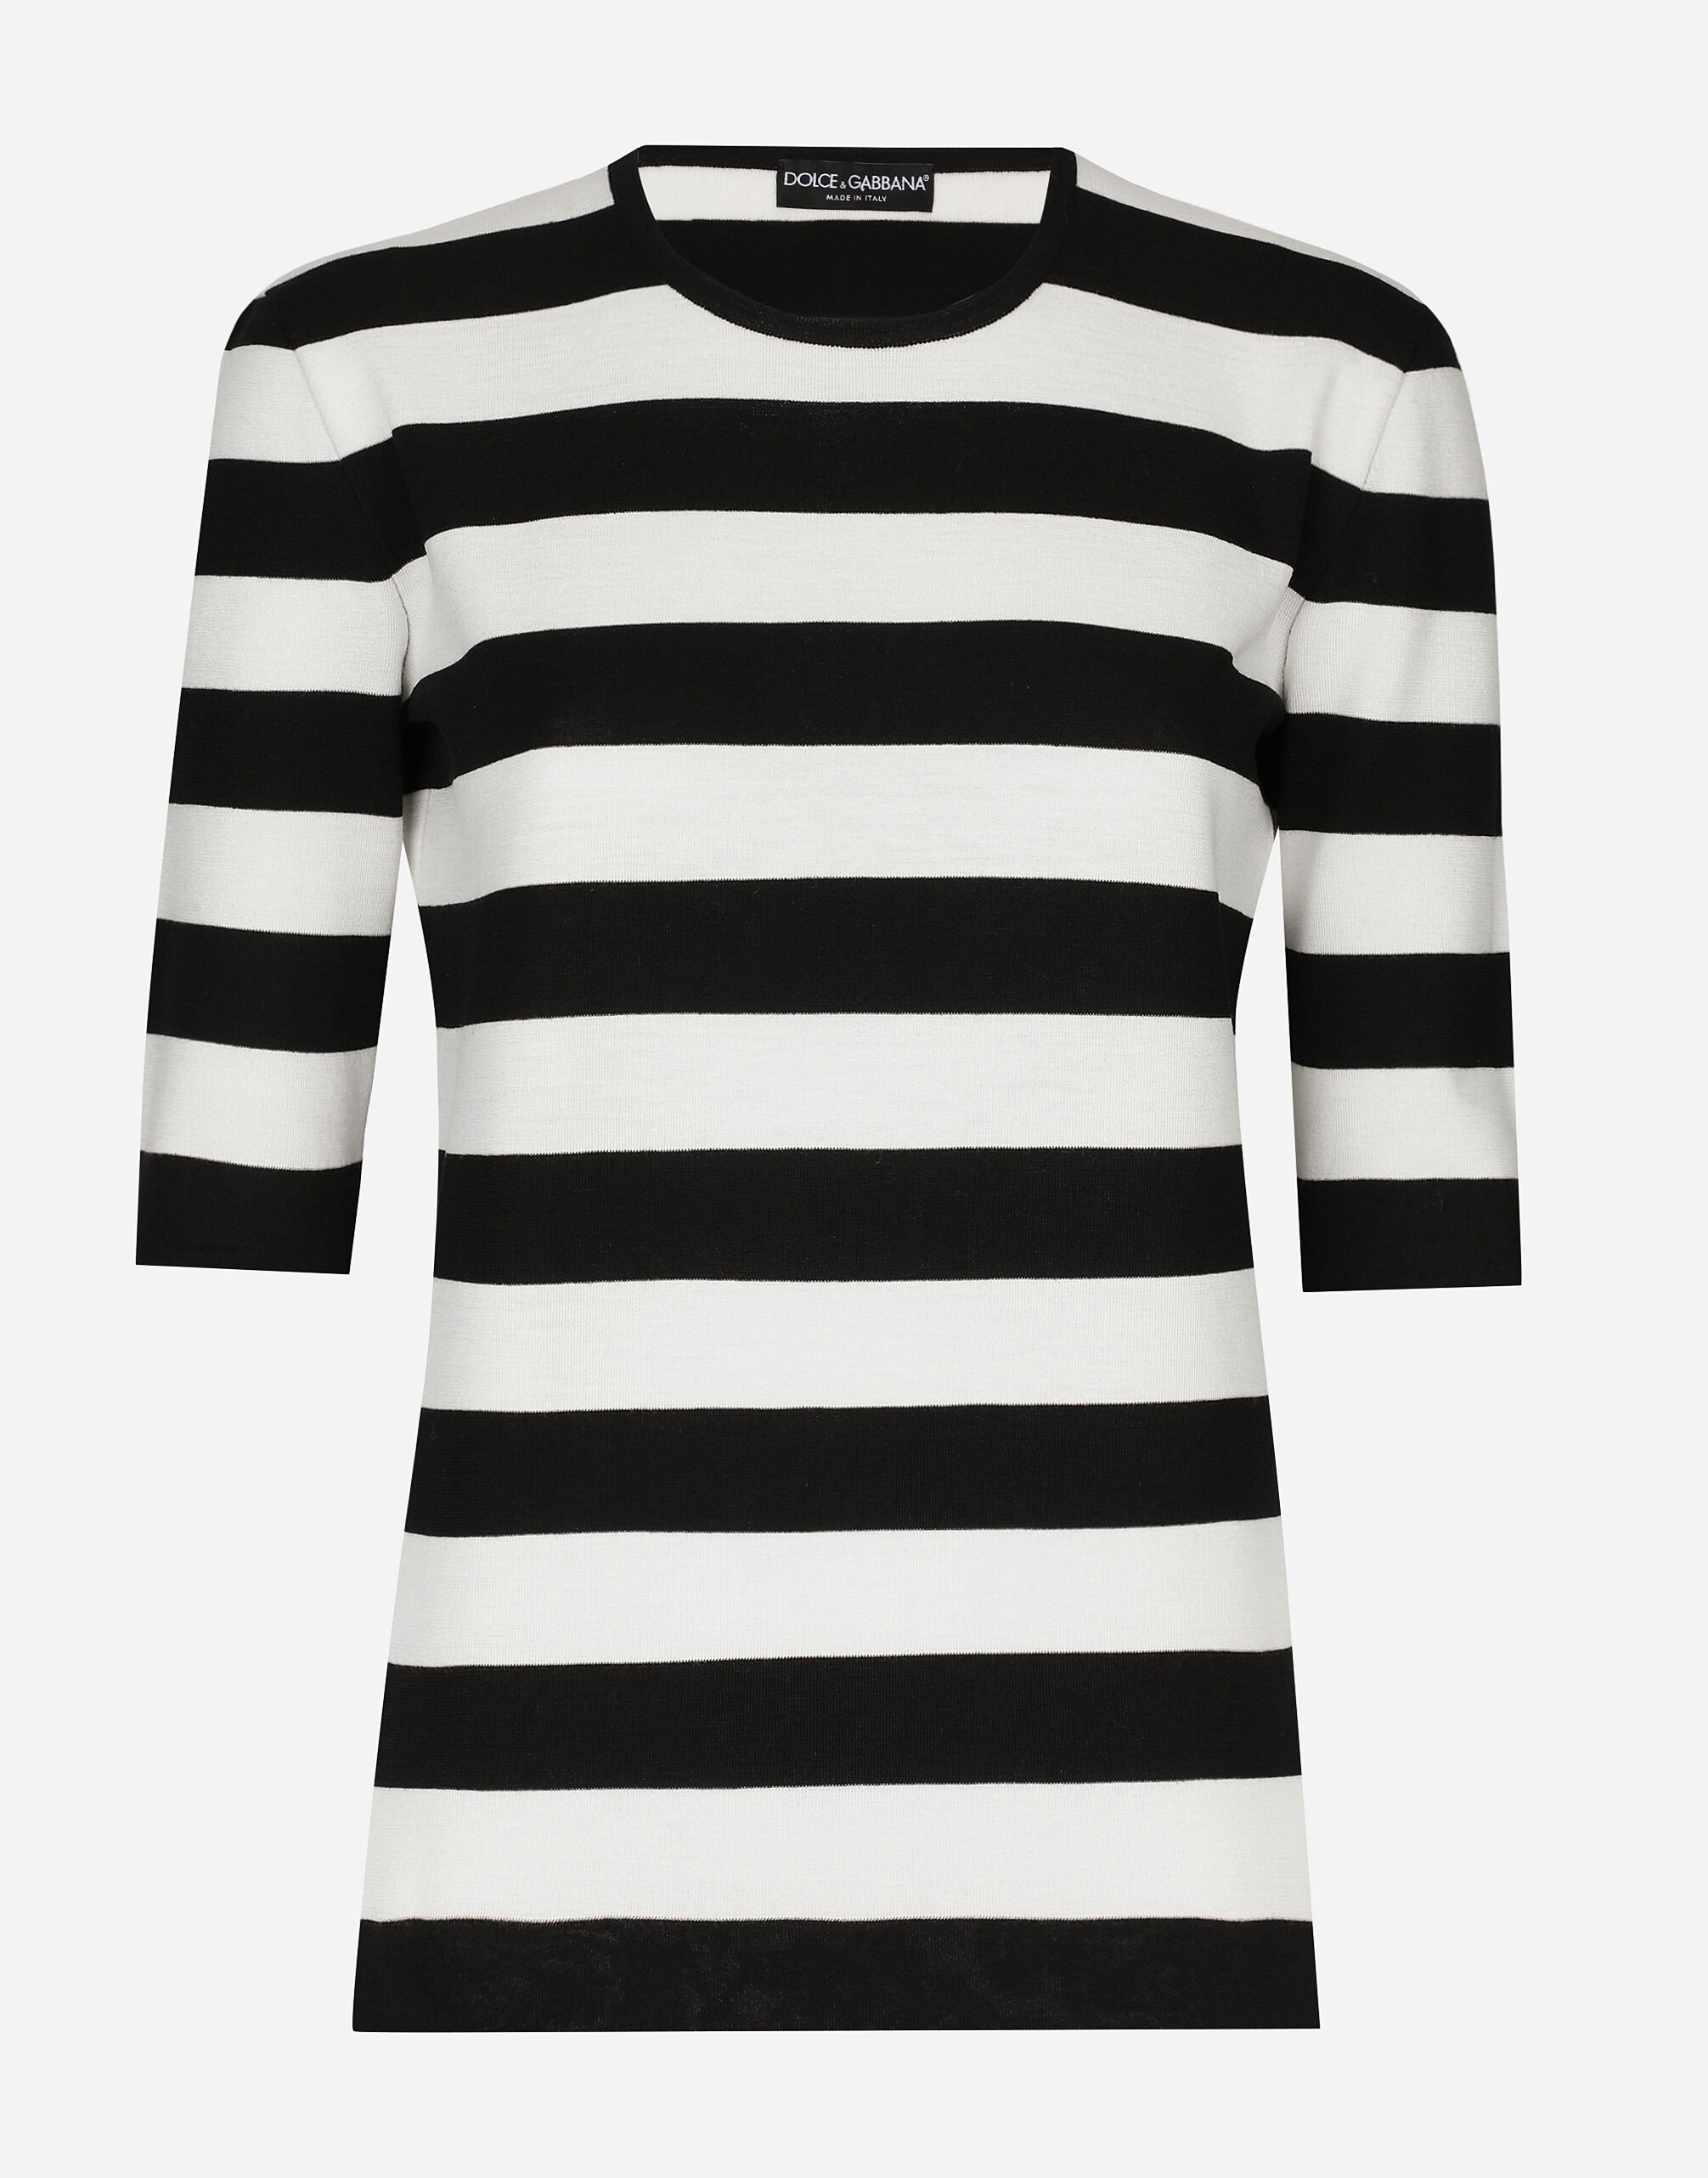 Dolce & Gabbana Wool sweater in inlaid stripes Print FXX06TJCVYK